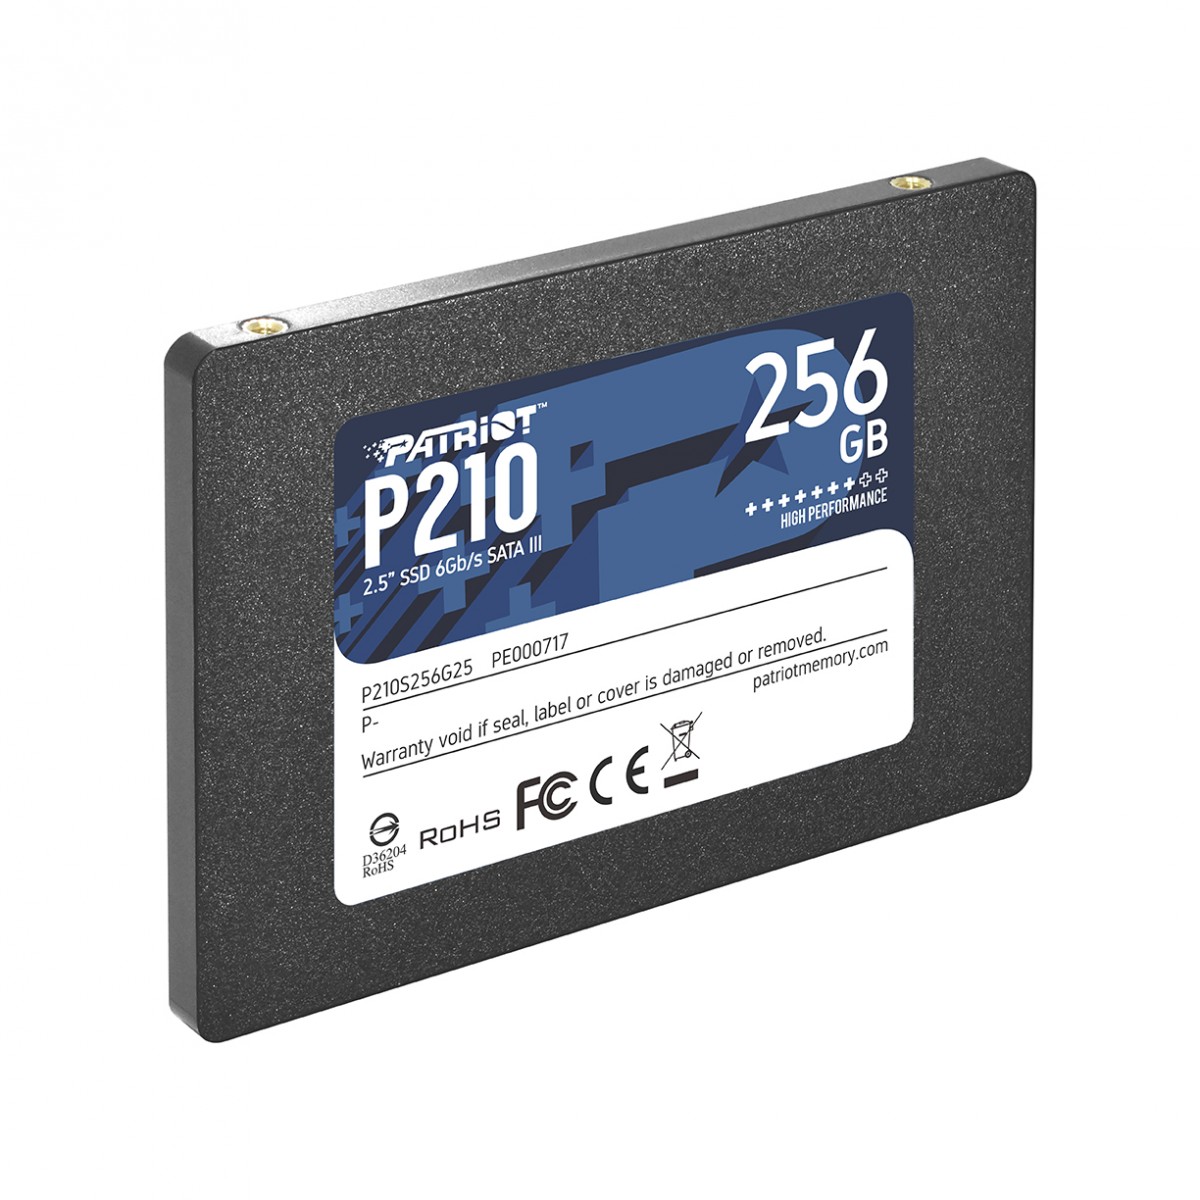 SSD Patriot P210, 256GB, Sata III, Leitura 500MB/s e Gravação 400MB/s, P210S256G25